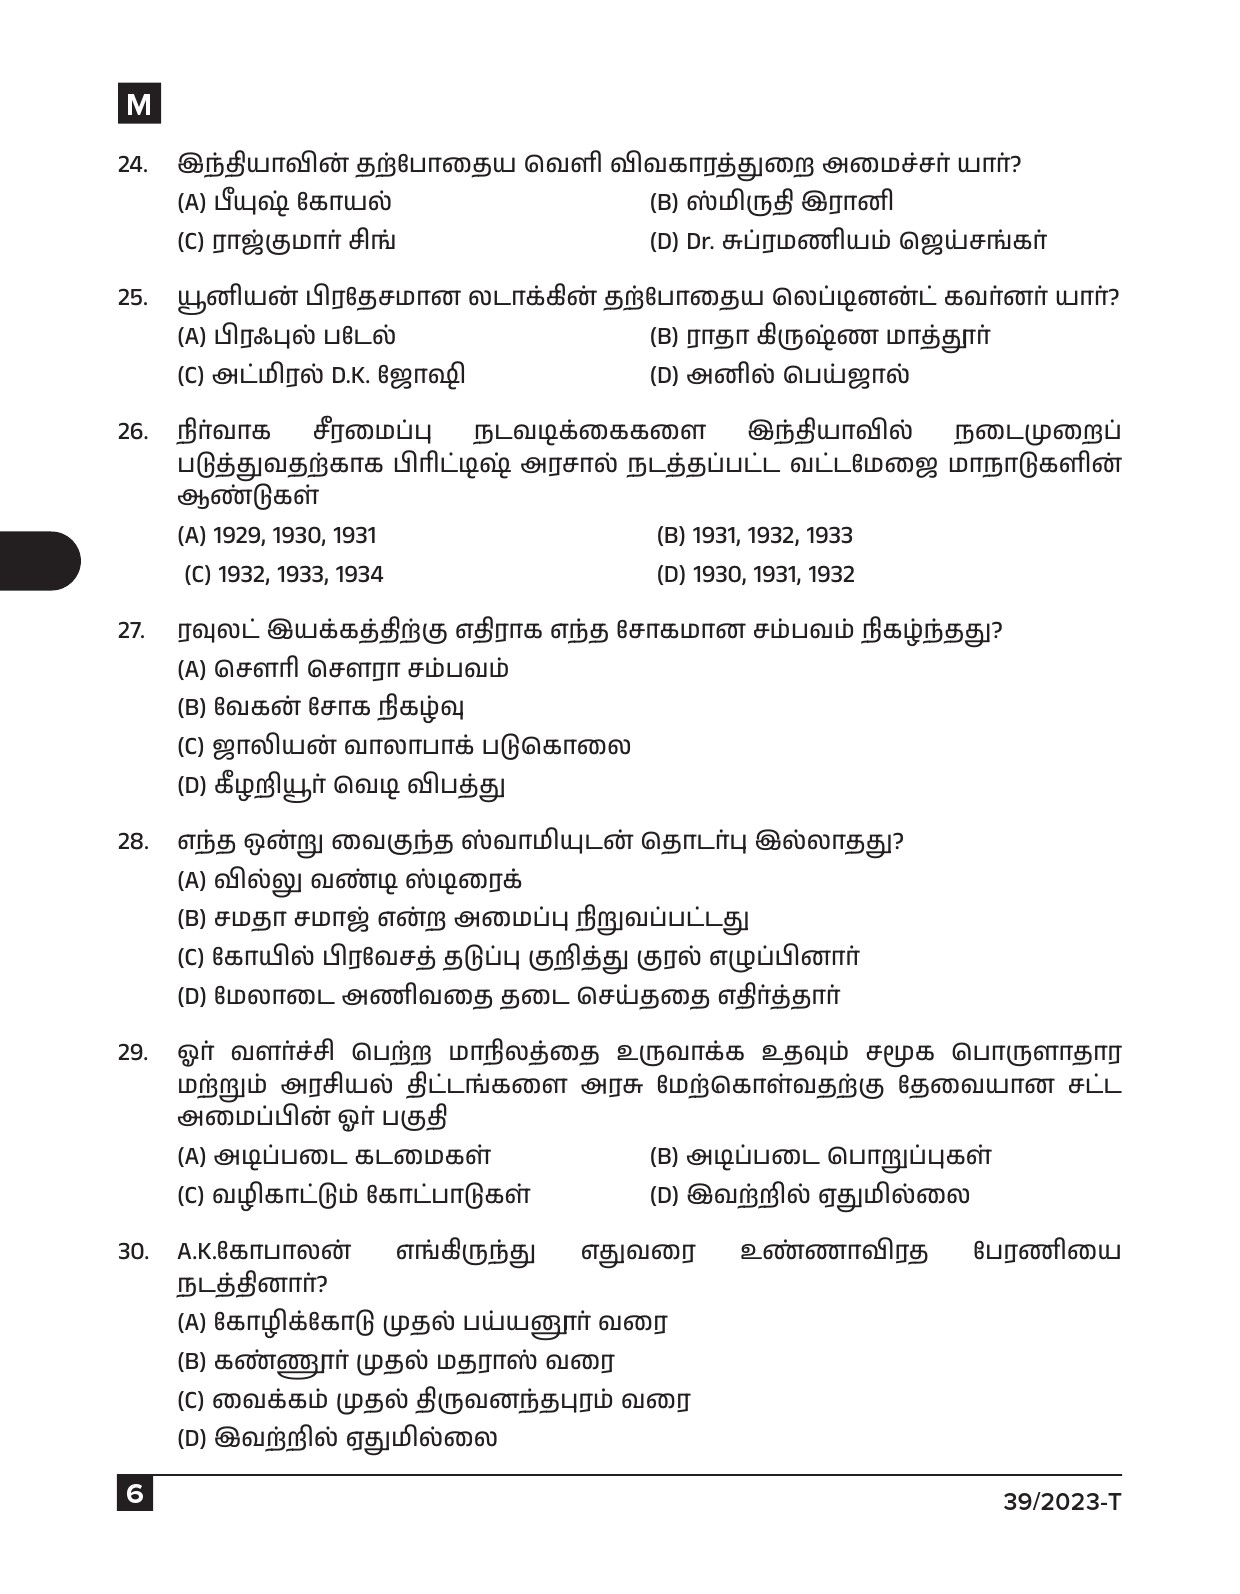 KPSC Ayah Attender Work Assistant Tamil Exam 2023 Code 0392023 T 5